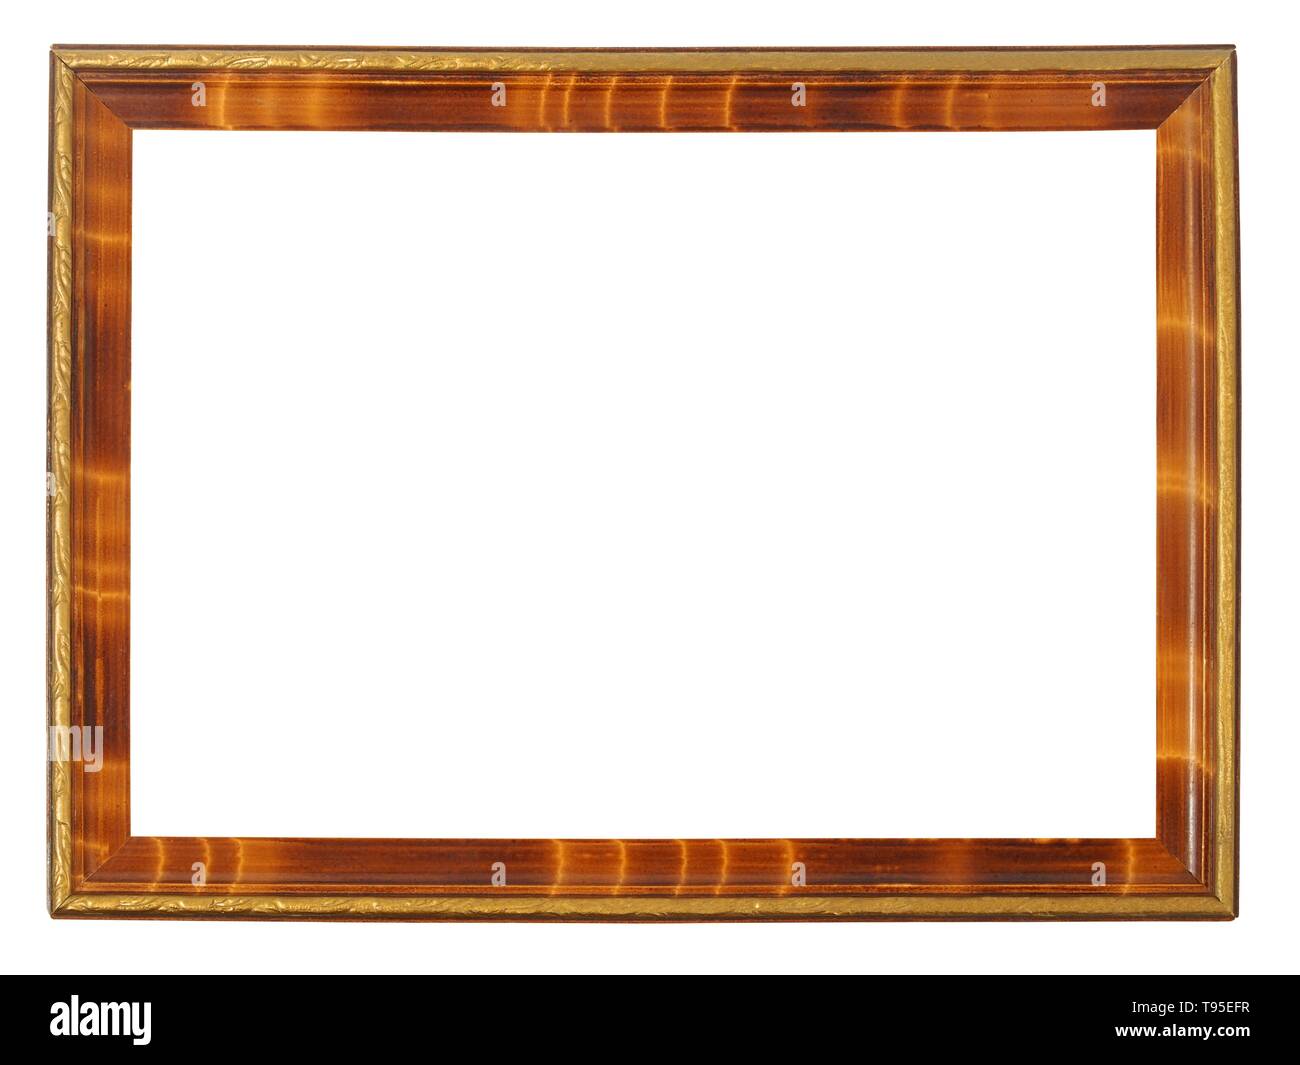 Big wooden frame isolated on white background Stock Photo